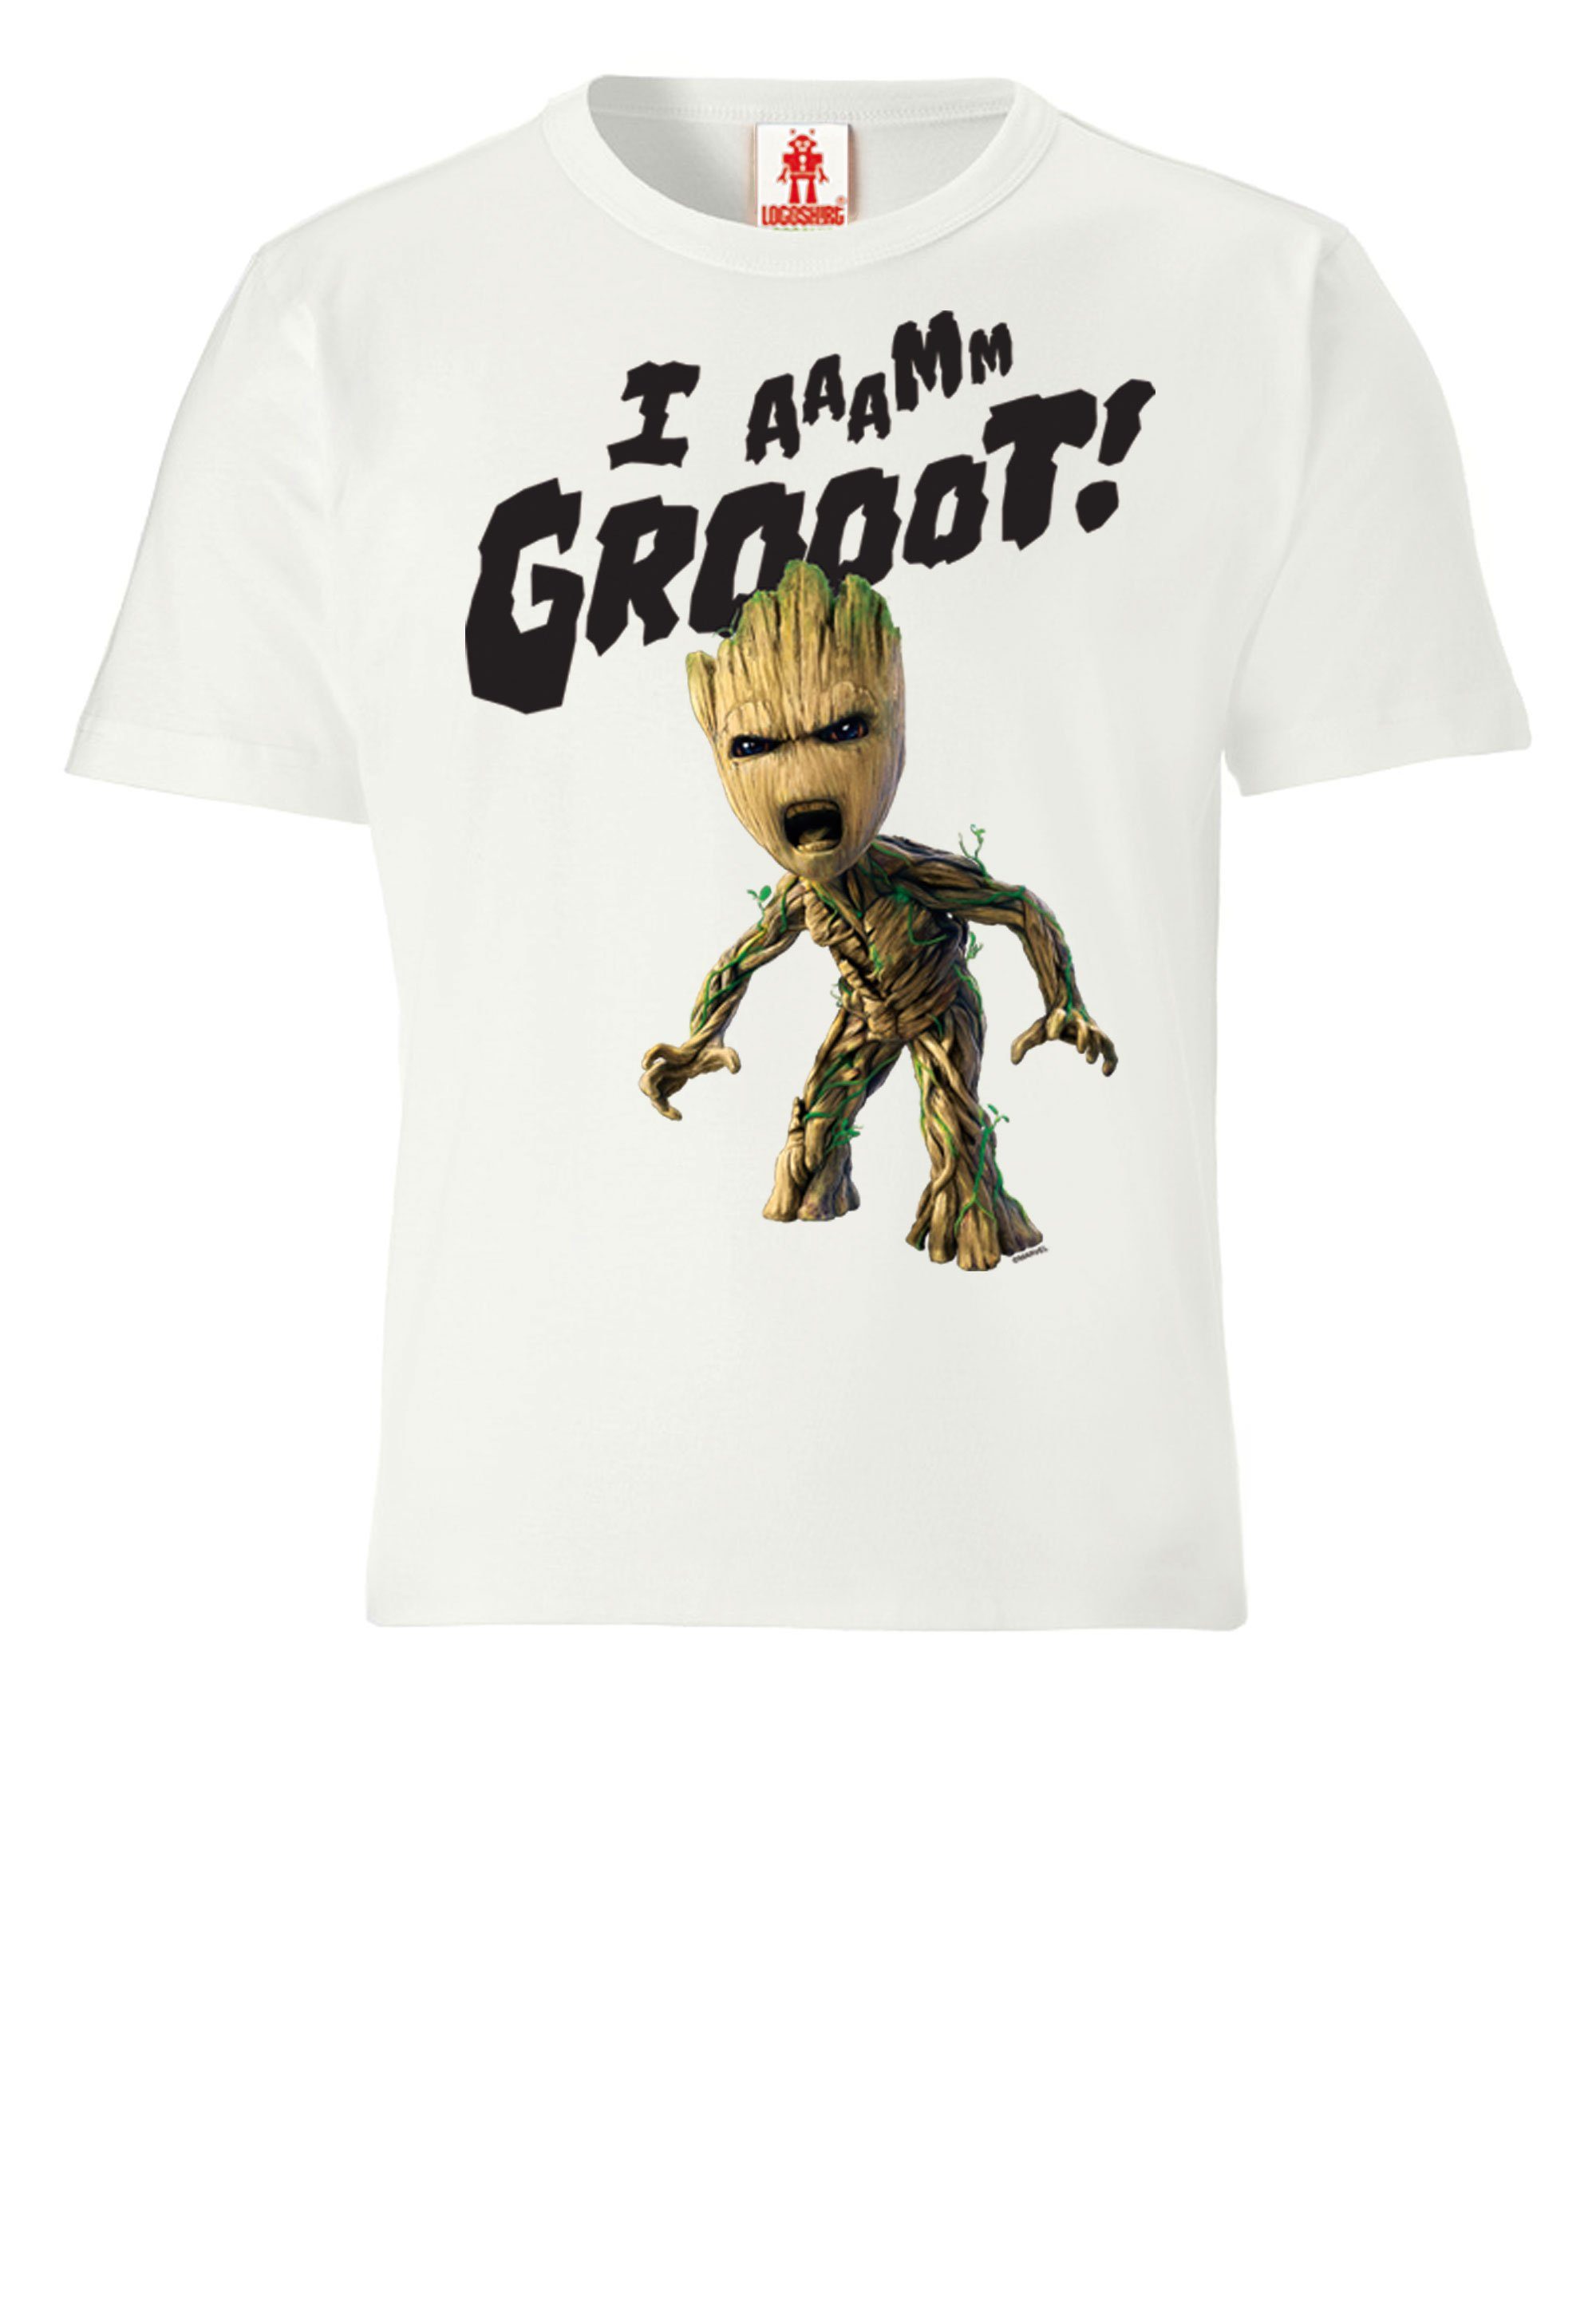 Groot - Groot-Frontprint of Guardians Galaxy the T-Shirt mit LOGOSHIRT